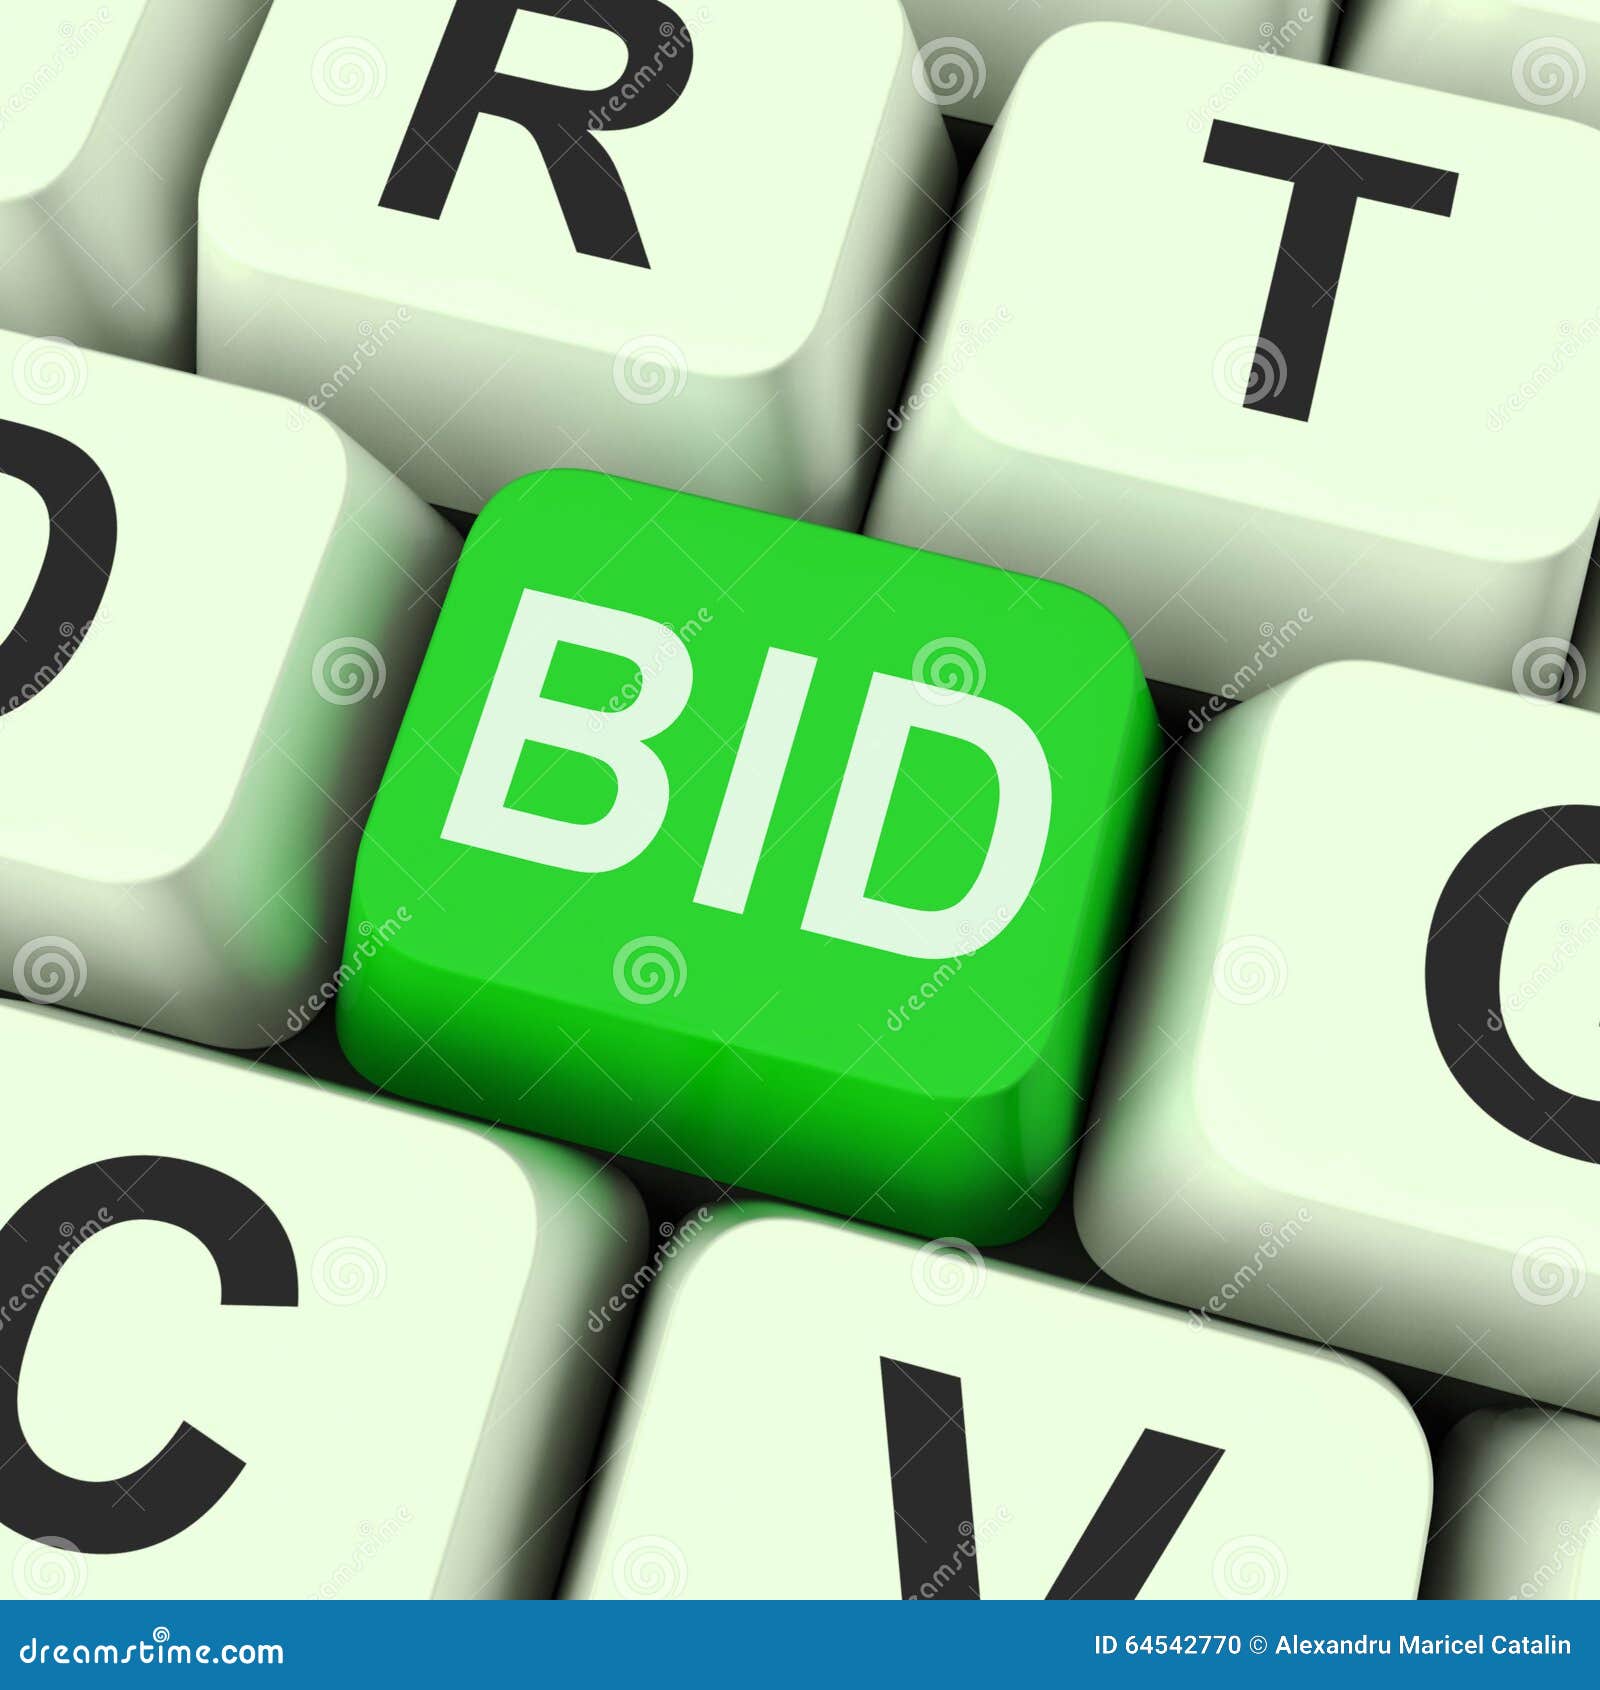 bid key shows online auction or bidding